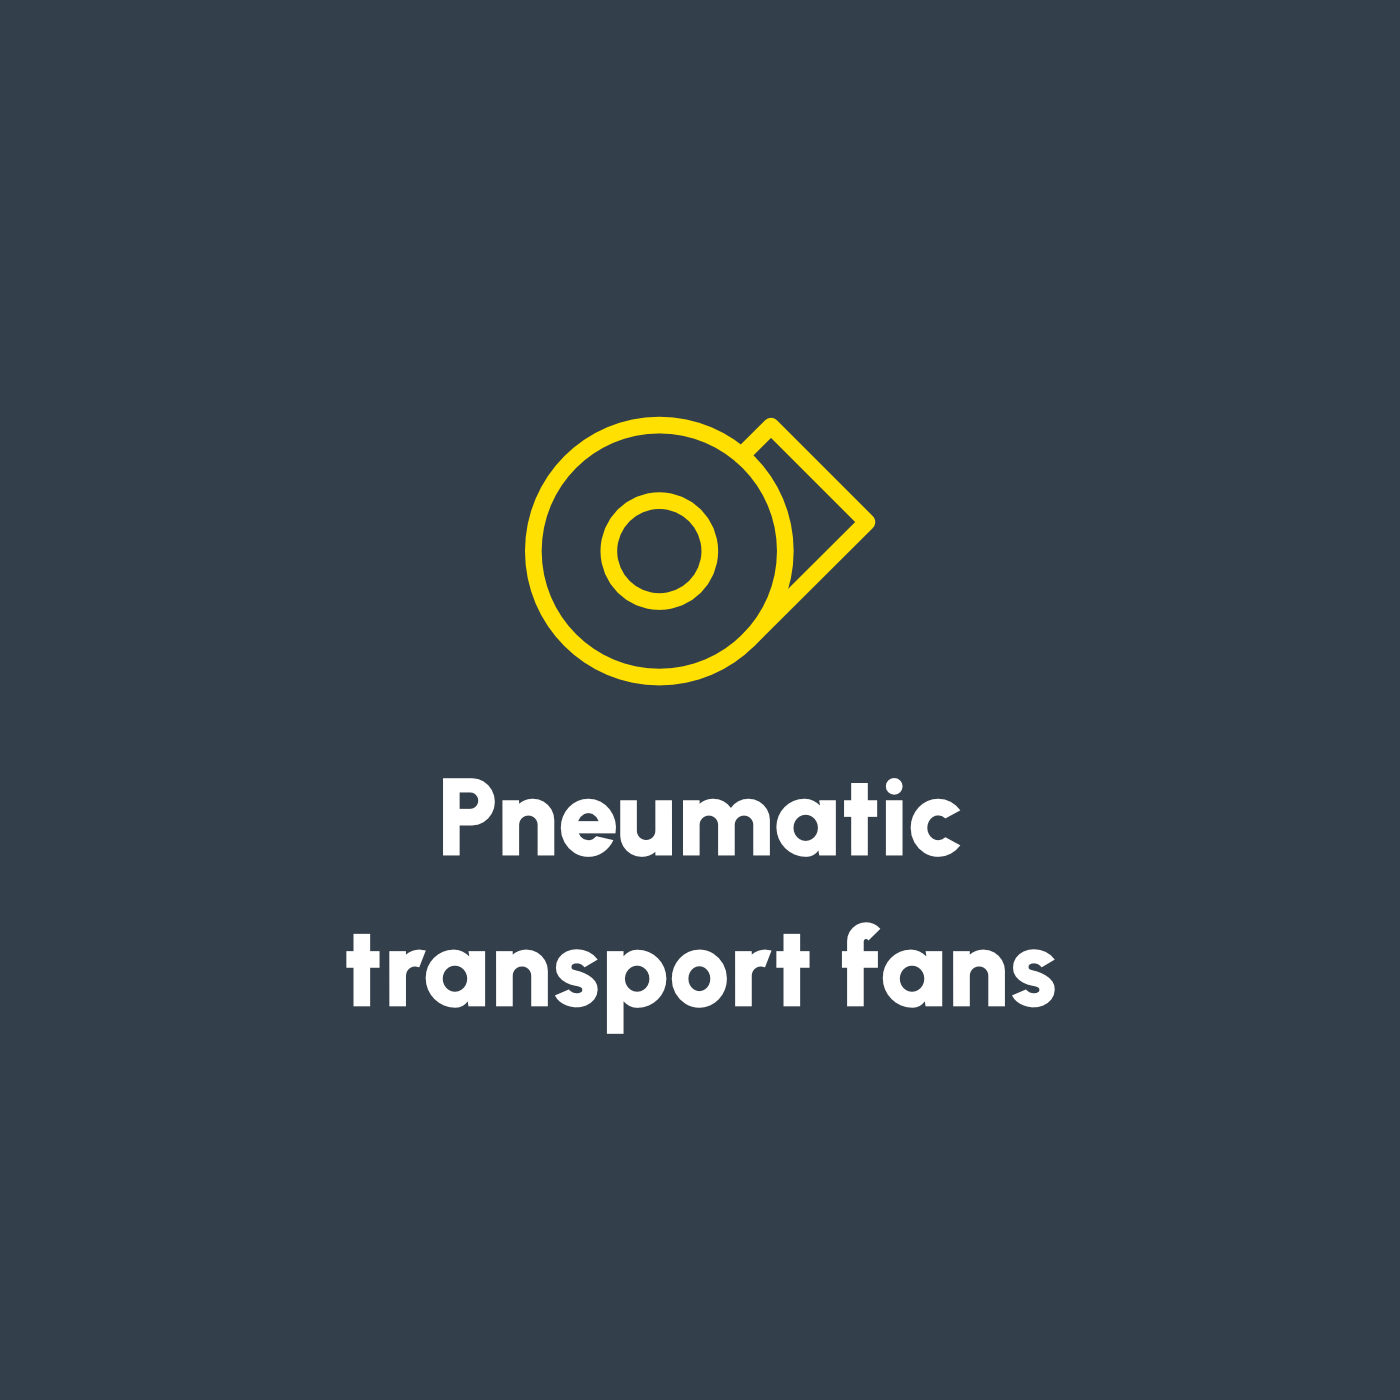 Pneumatic transport fans